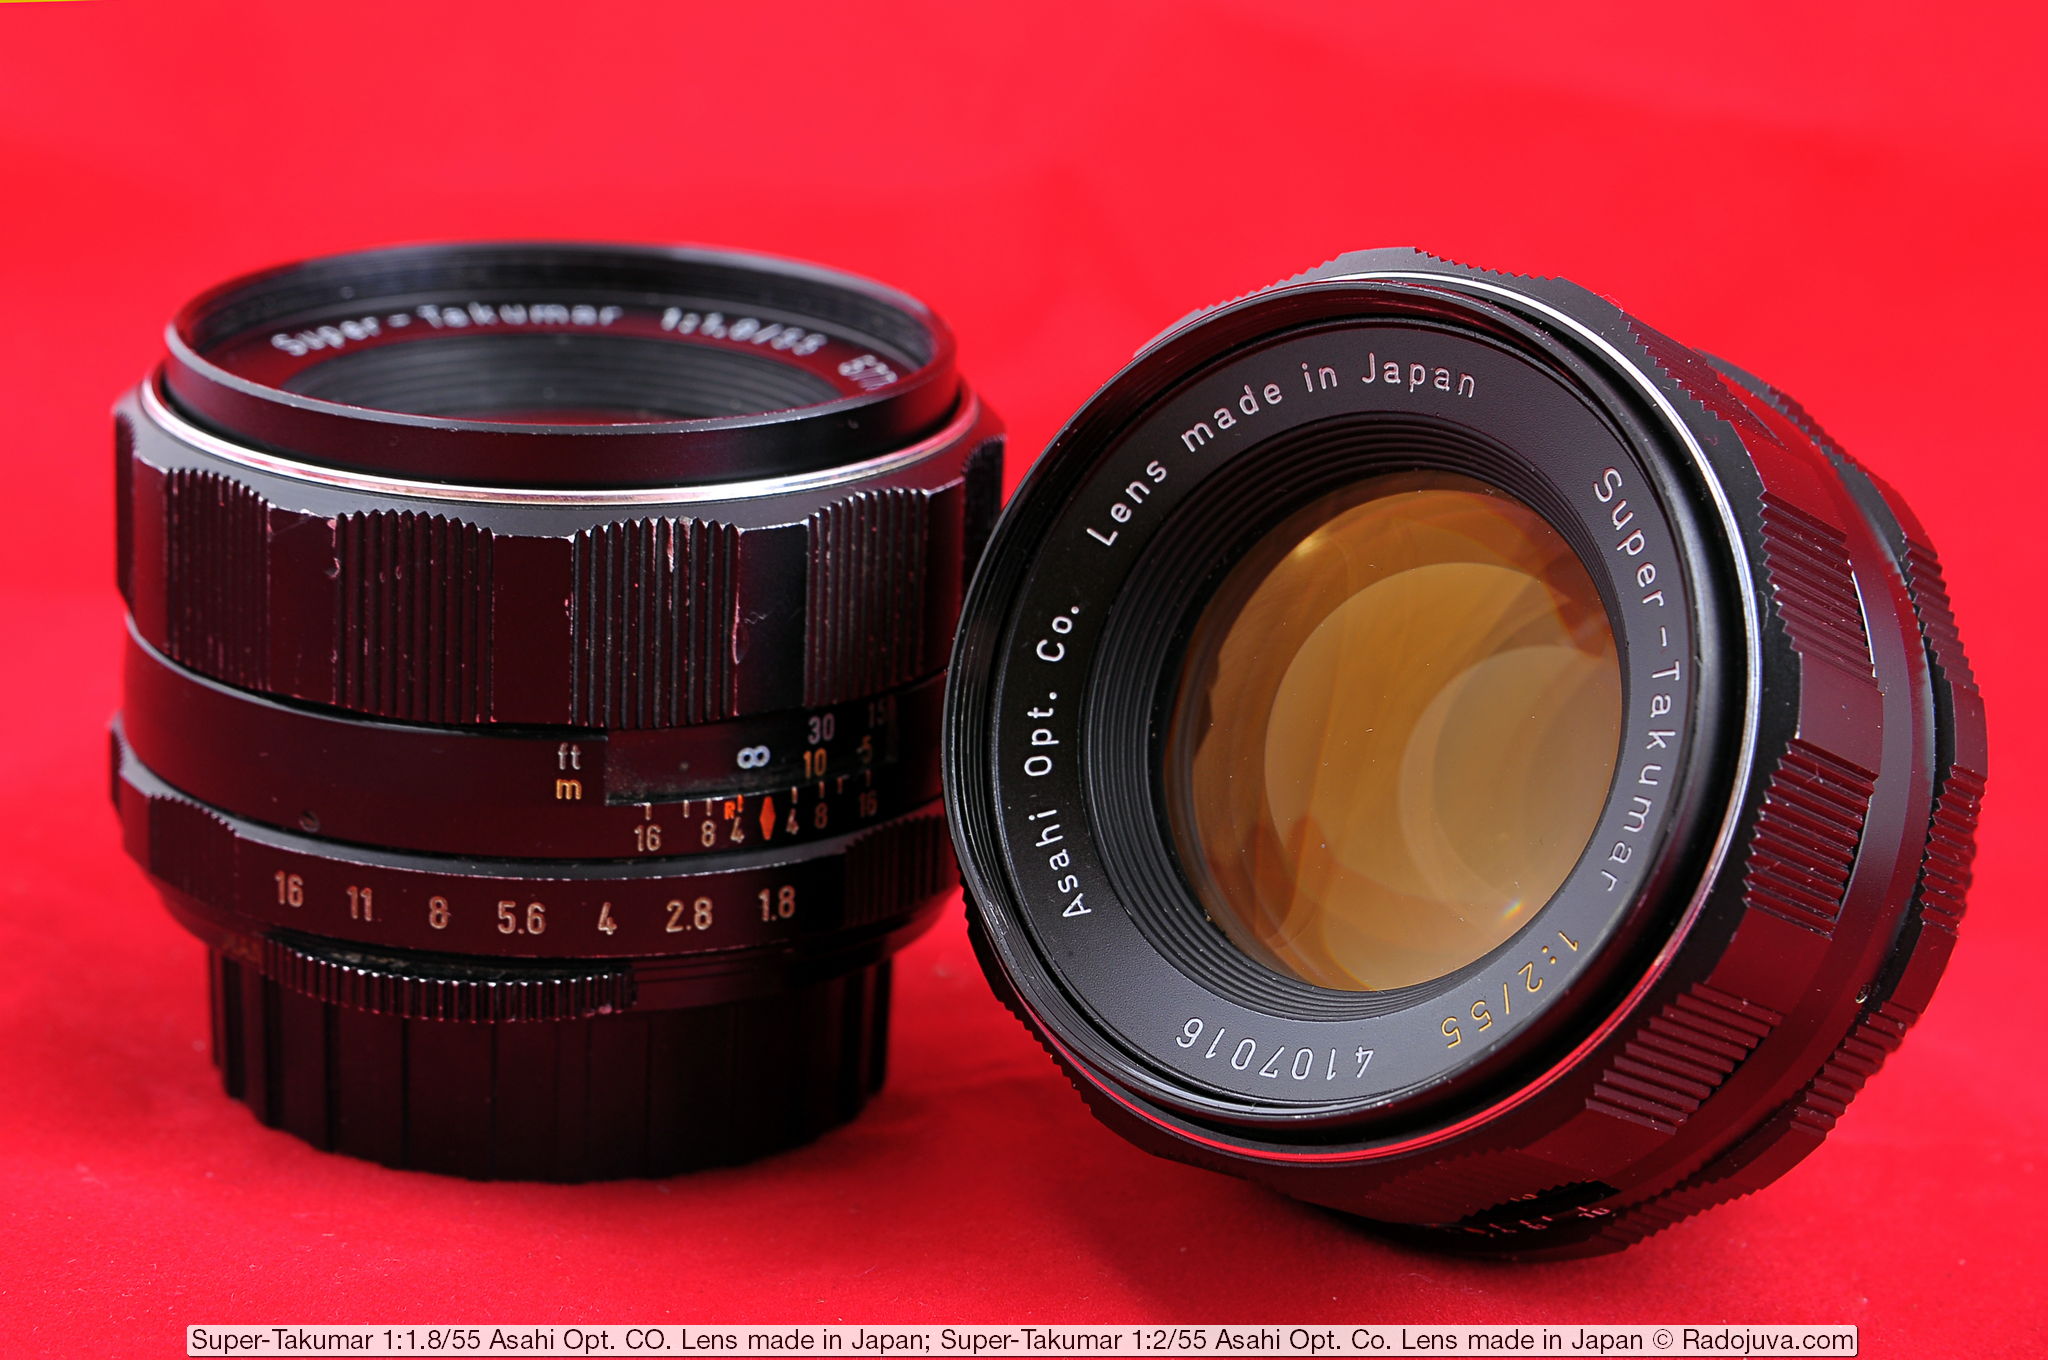 Lenzen Super-Takumar 1:1.8/55 Asahi Opt. Co. Lens gemaakt in Japan en Super-Takumar 1:2/55 Asahi Opt. Co. Lens gemaakt in Japan